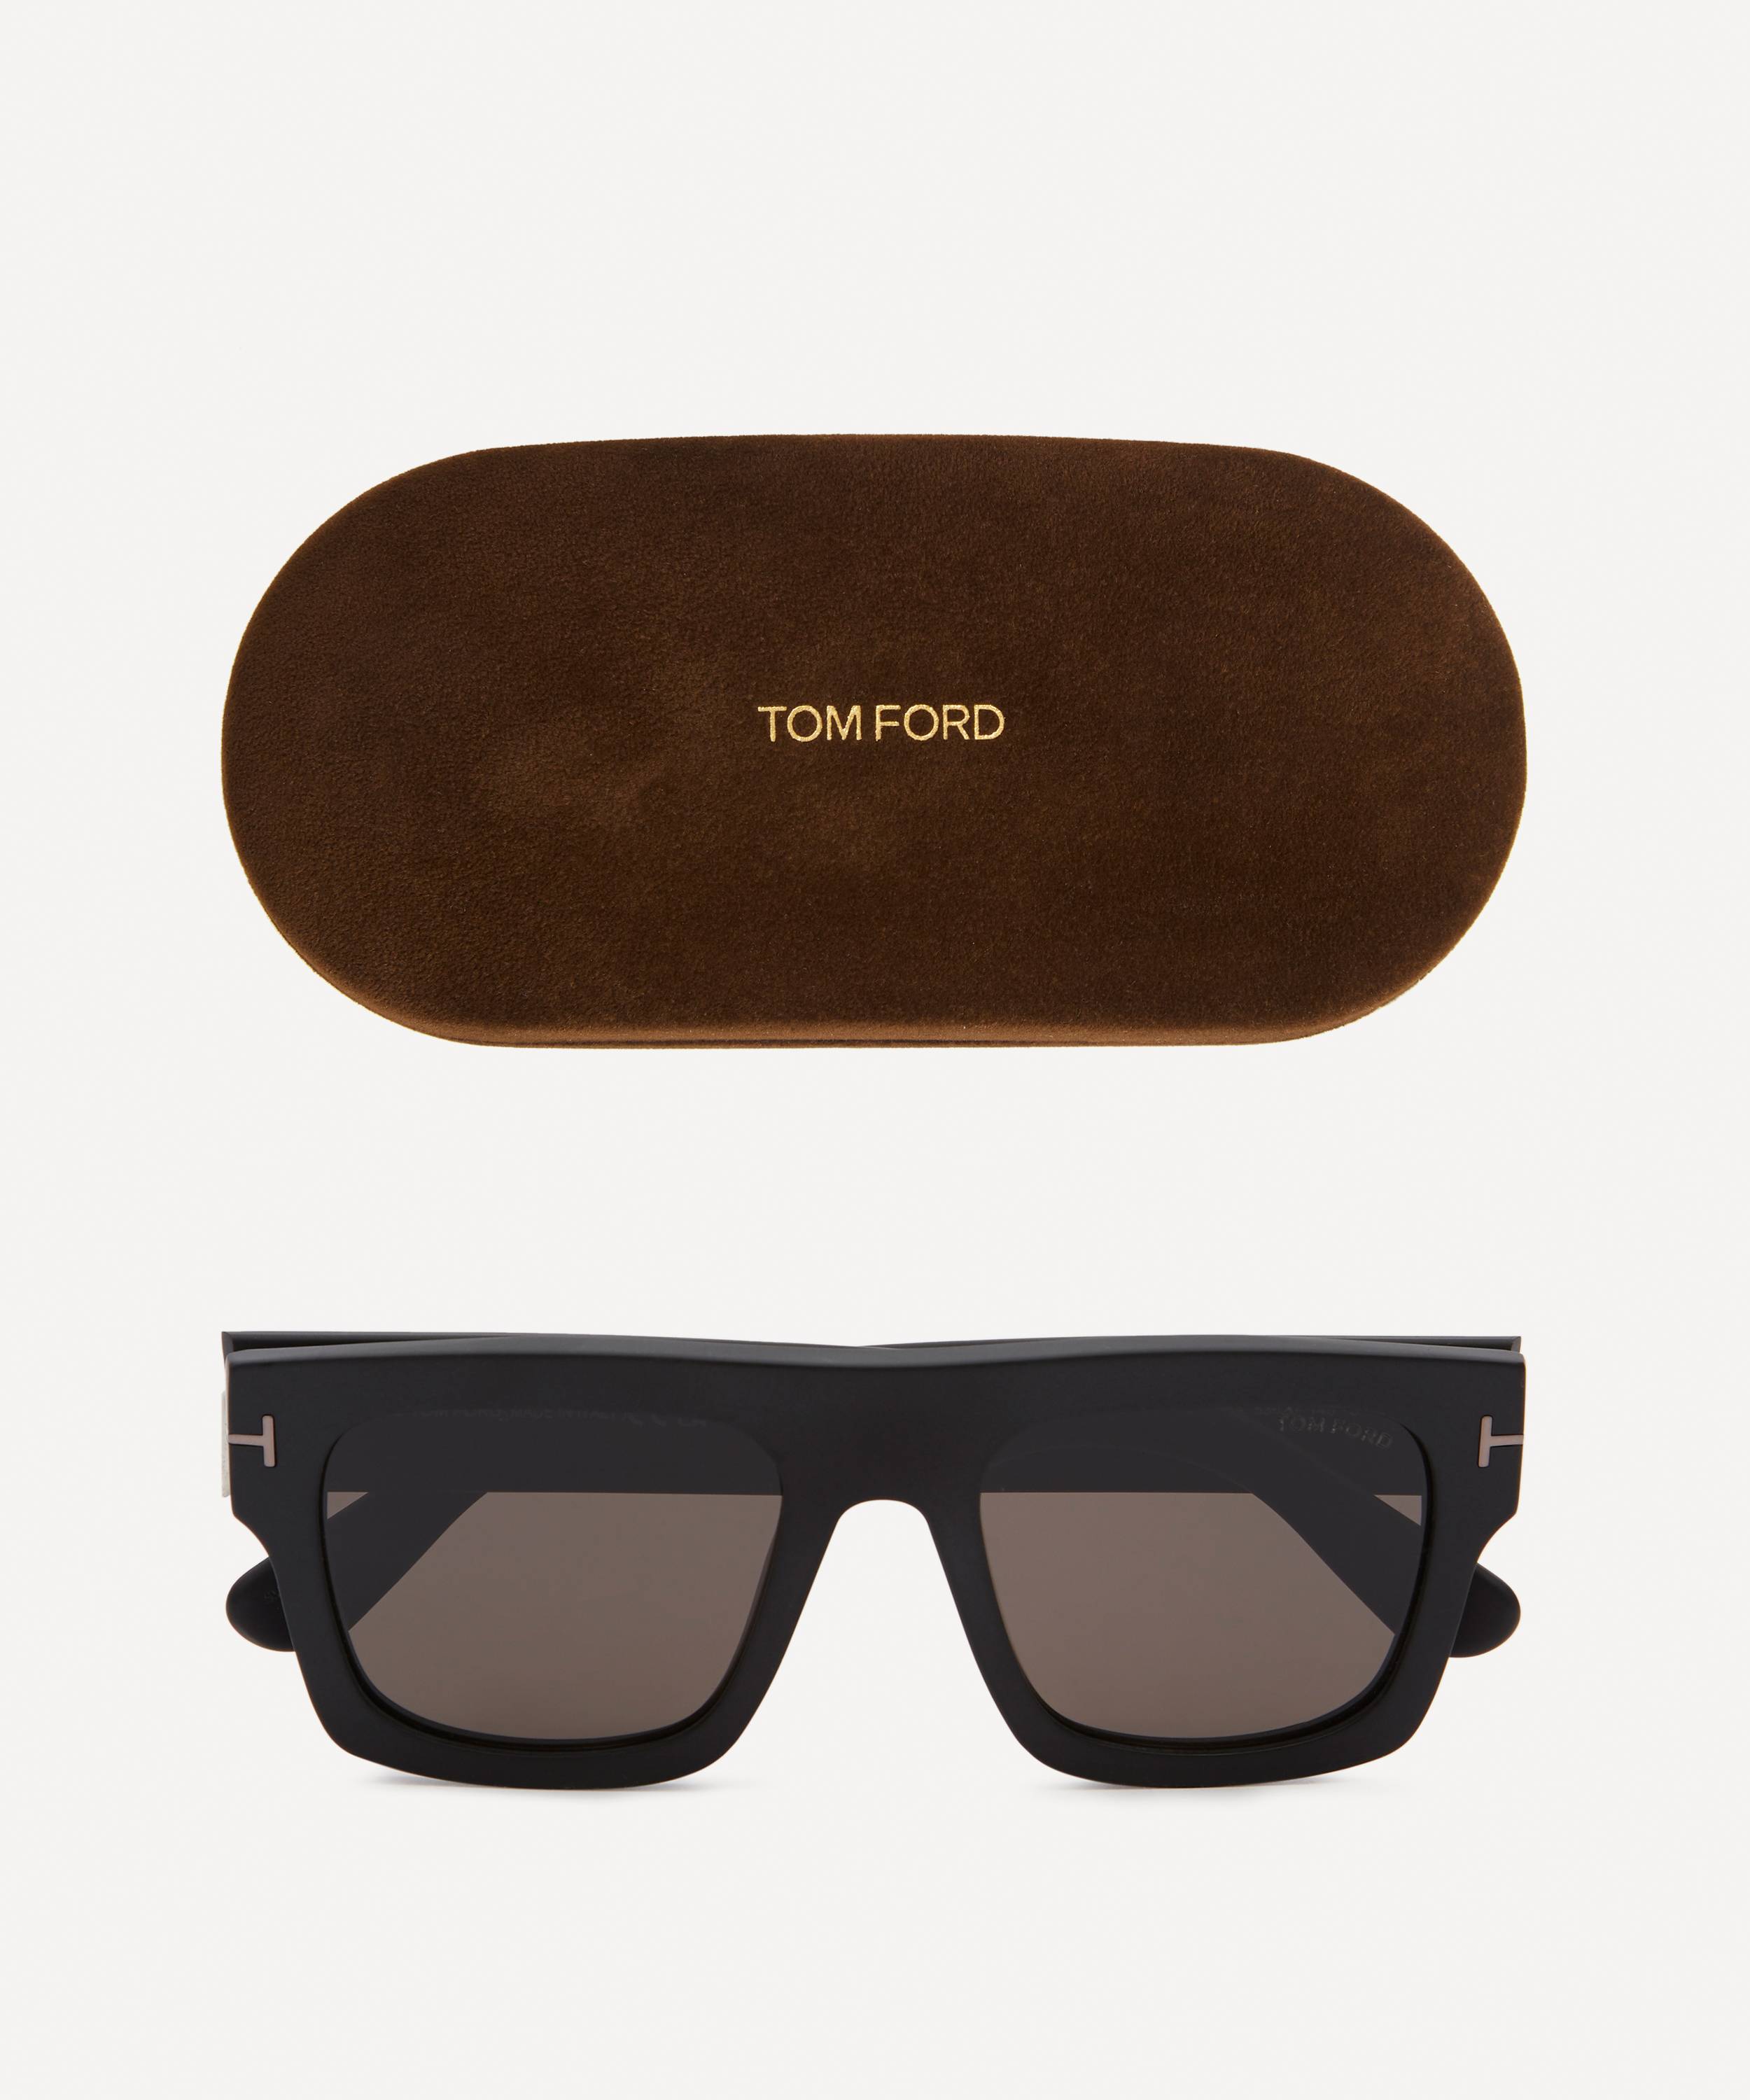 Tom Ford Fausto Acetate Sunglasses | Liberty